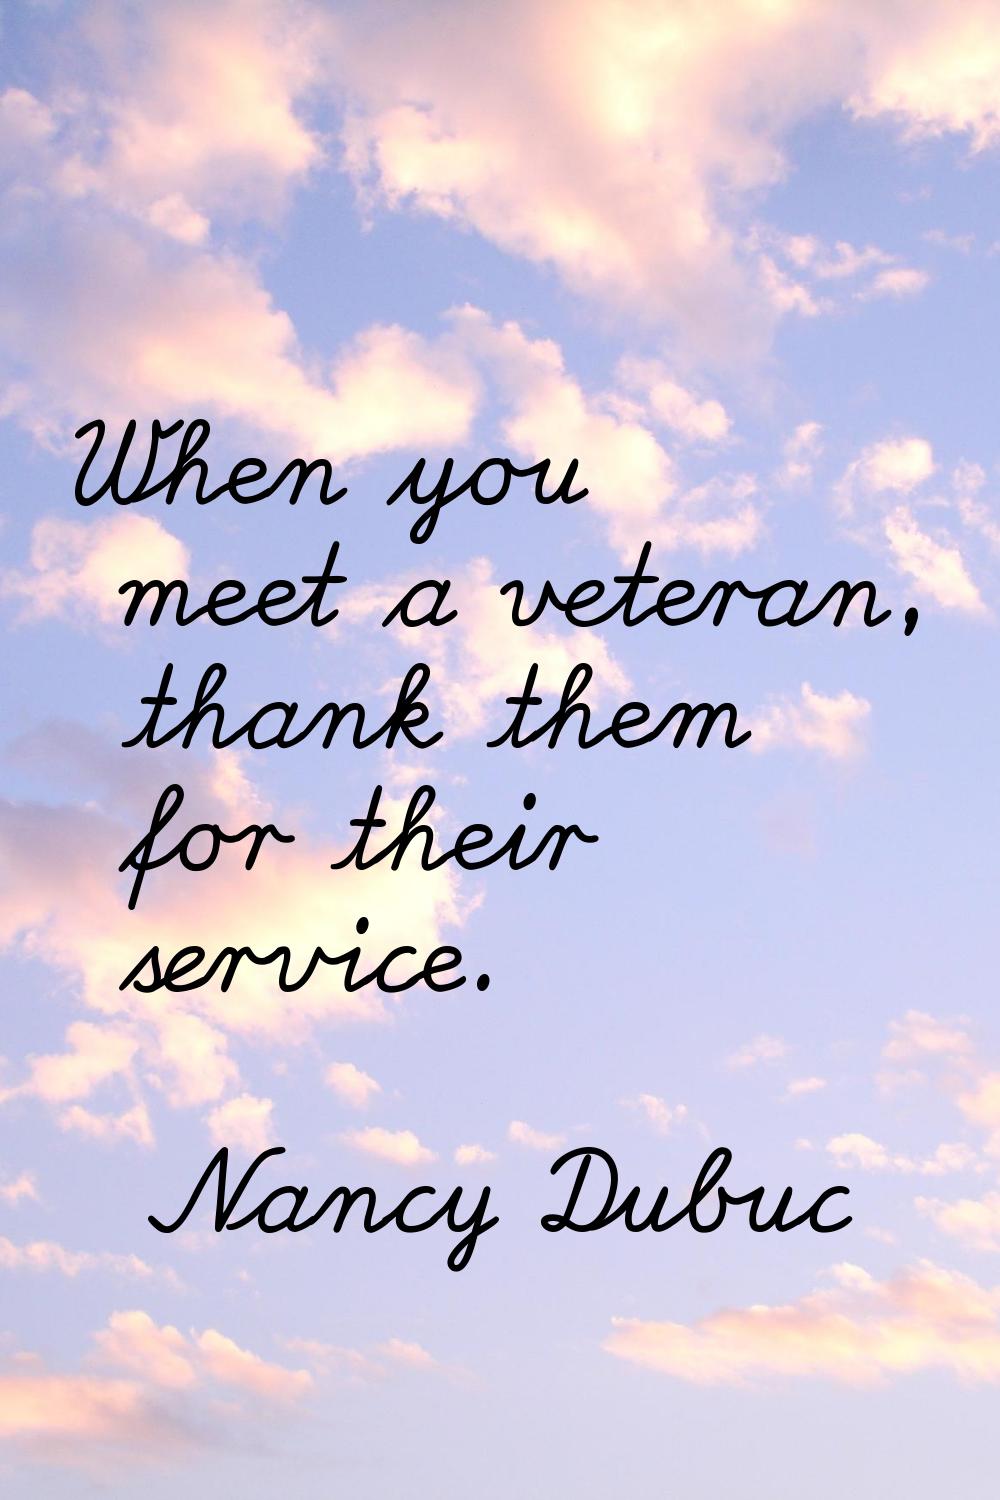 When you meet a veteran, thank them for their service.